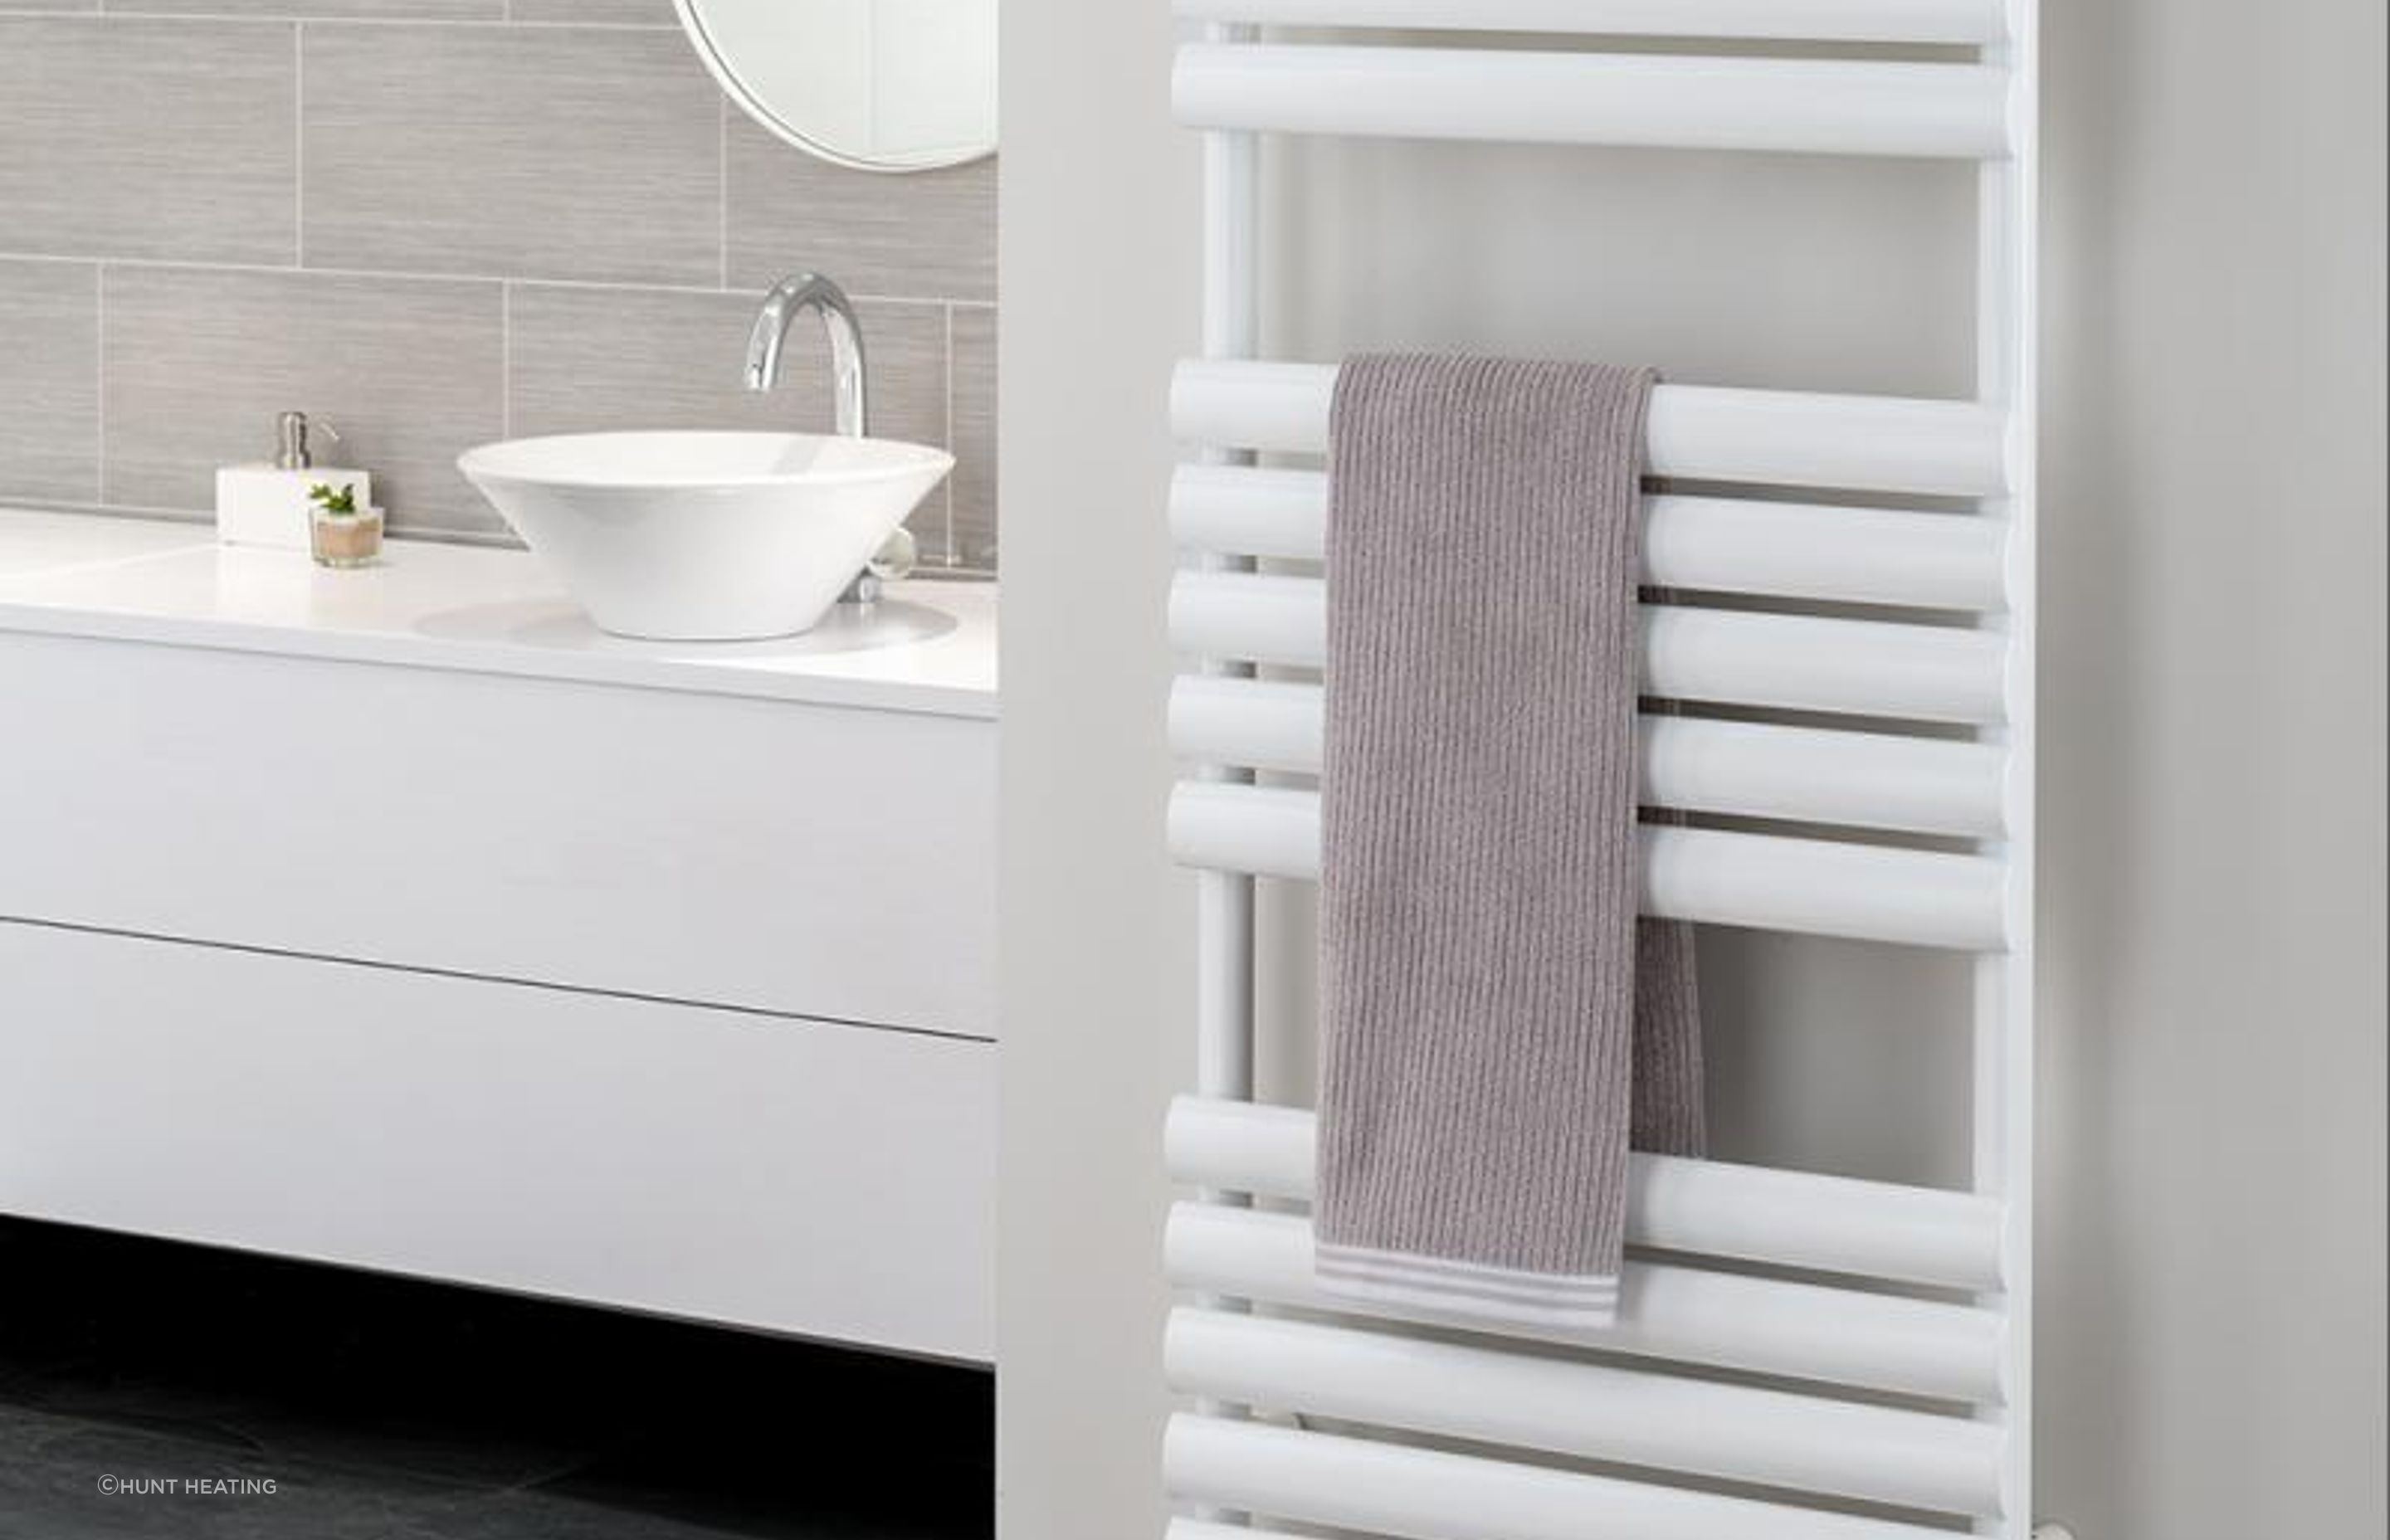 A small towel stays warm on a Ellipsis Towel Rail Heated Towel Rails from Hunt Heating